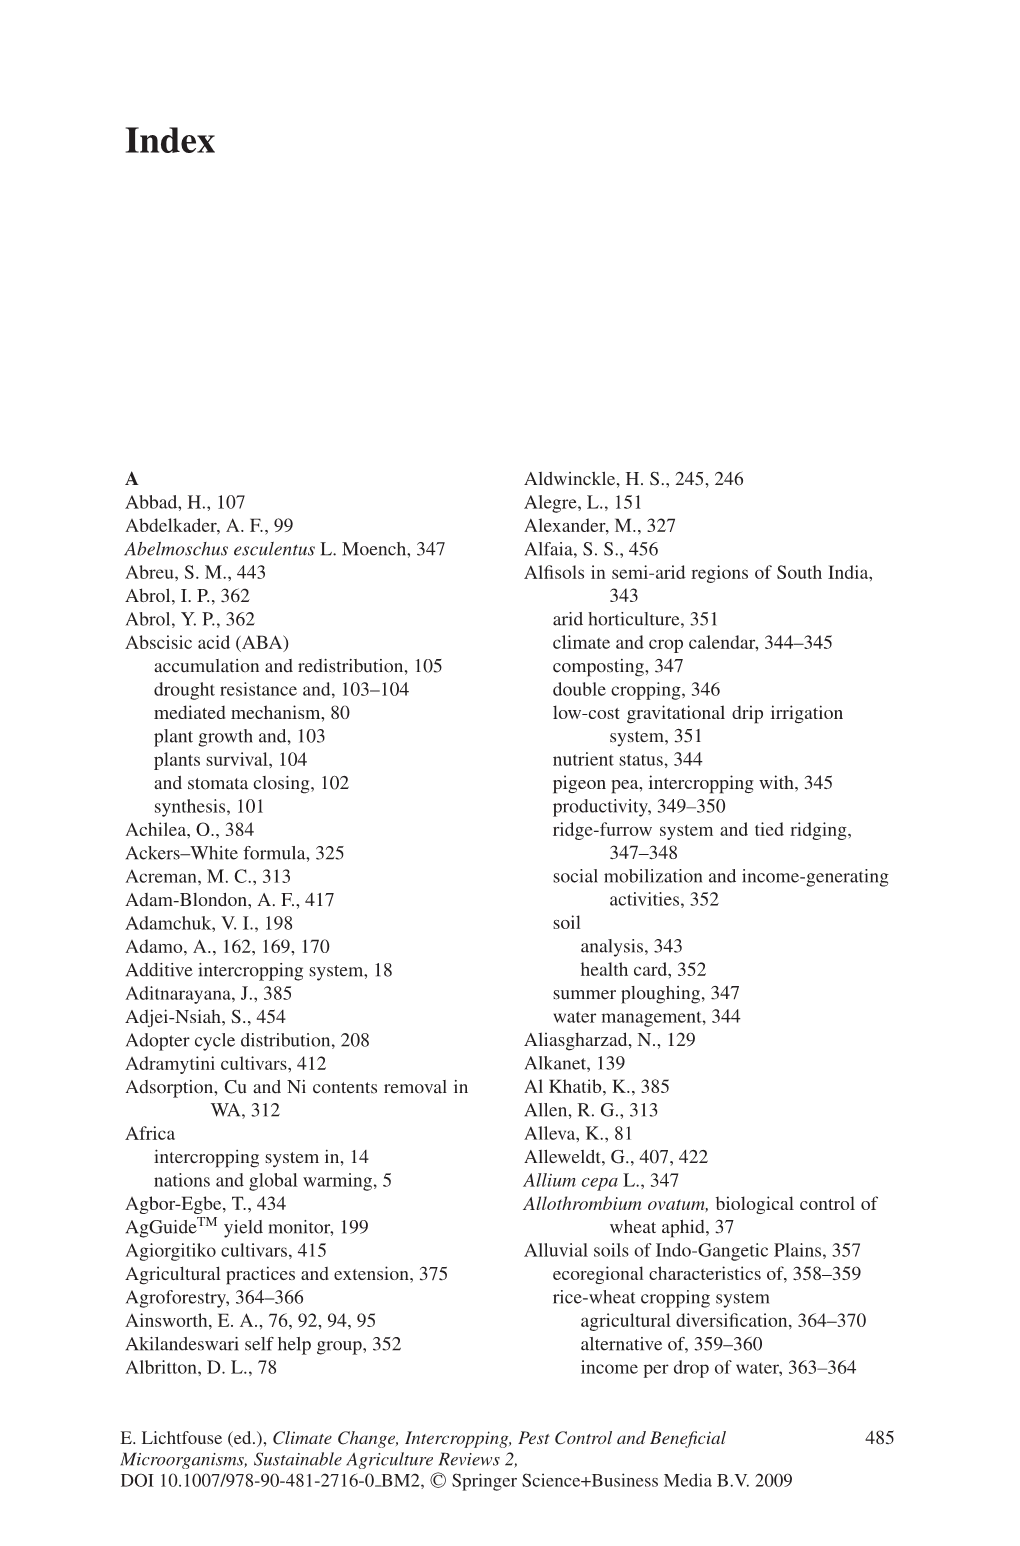 A Abbad, H., 107 Abdelkader, A. F., 99 Abelmoschus Esculentus L